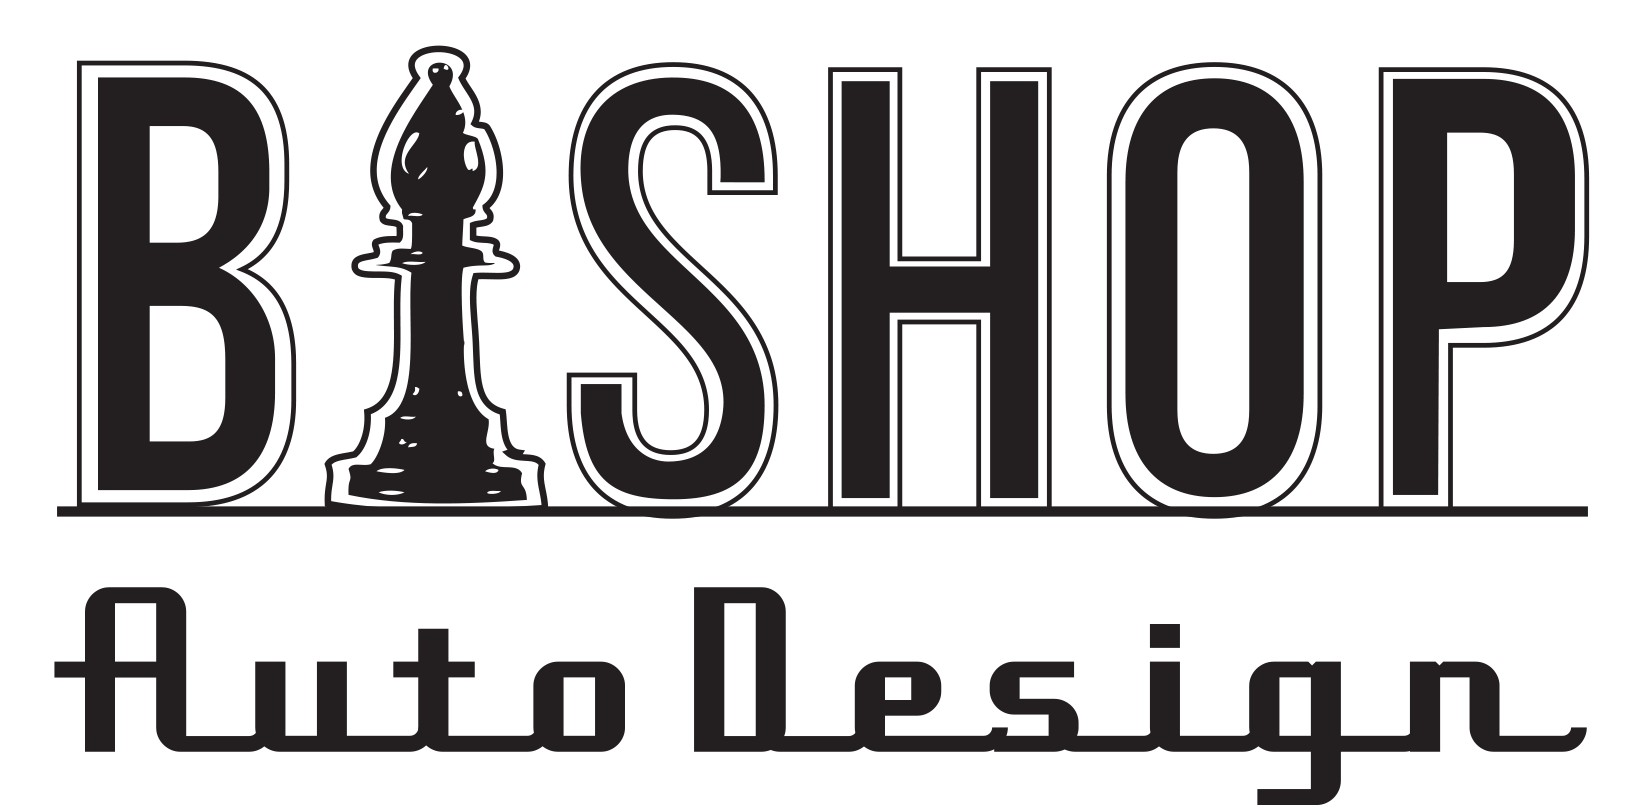 Bishop_Auto_Design_All_Outlined_Revised_Logo.png